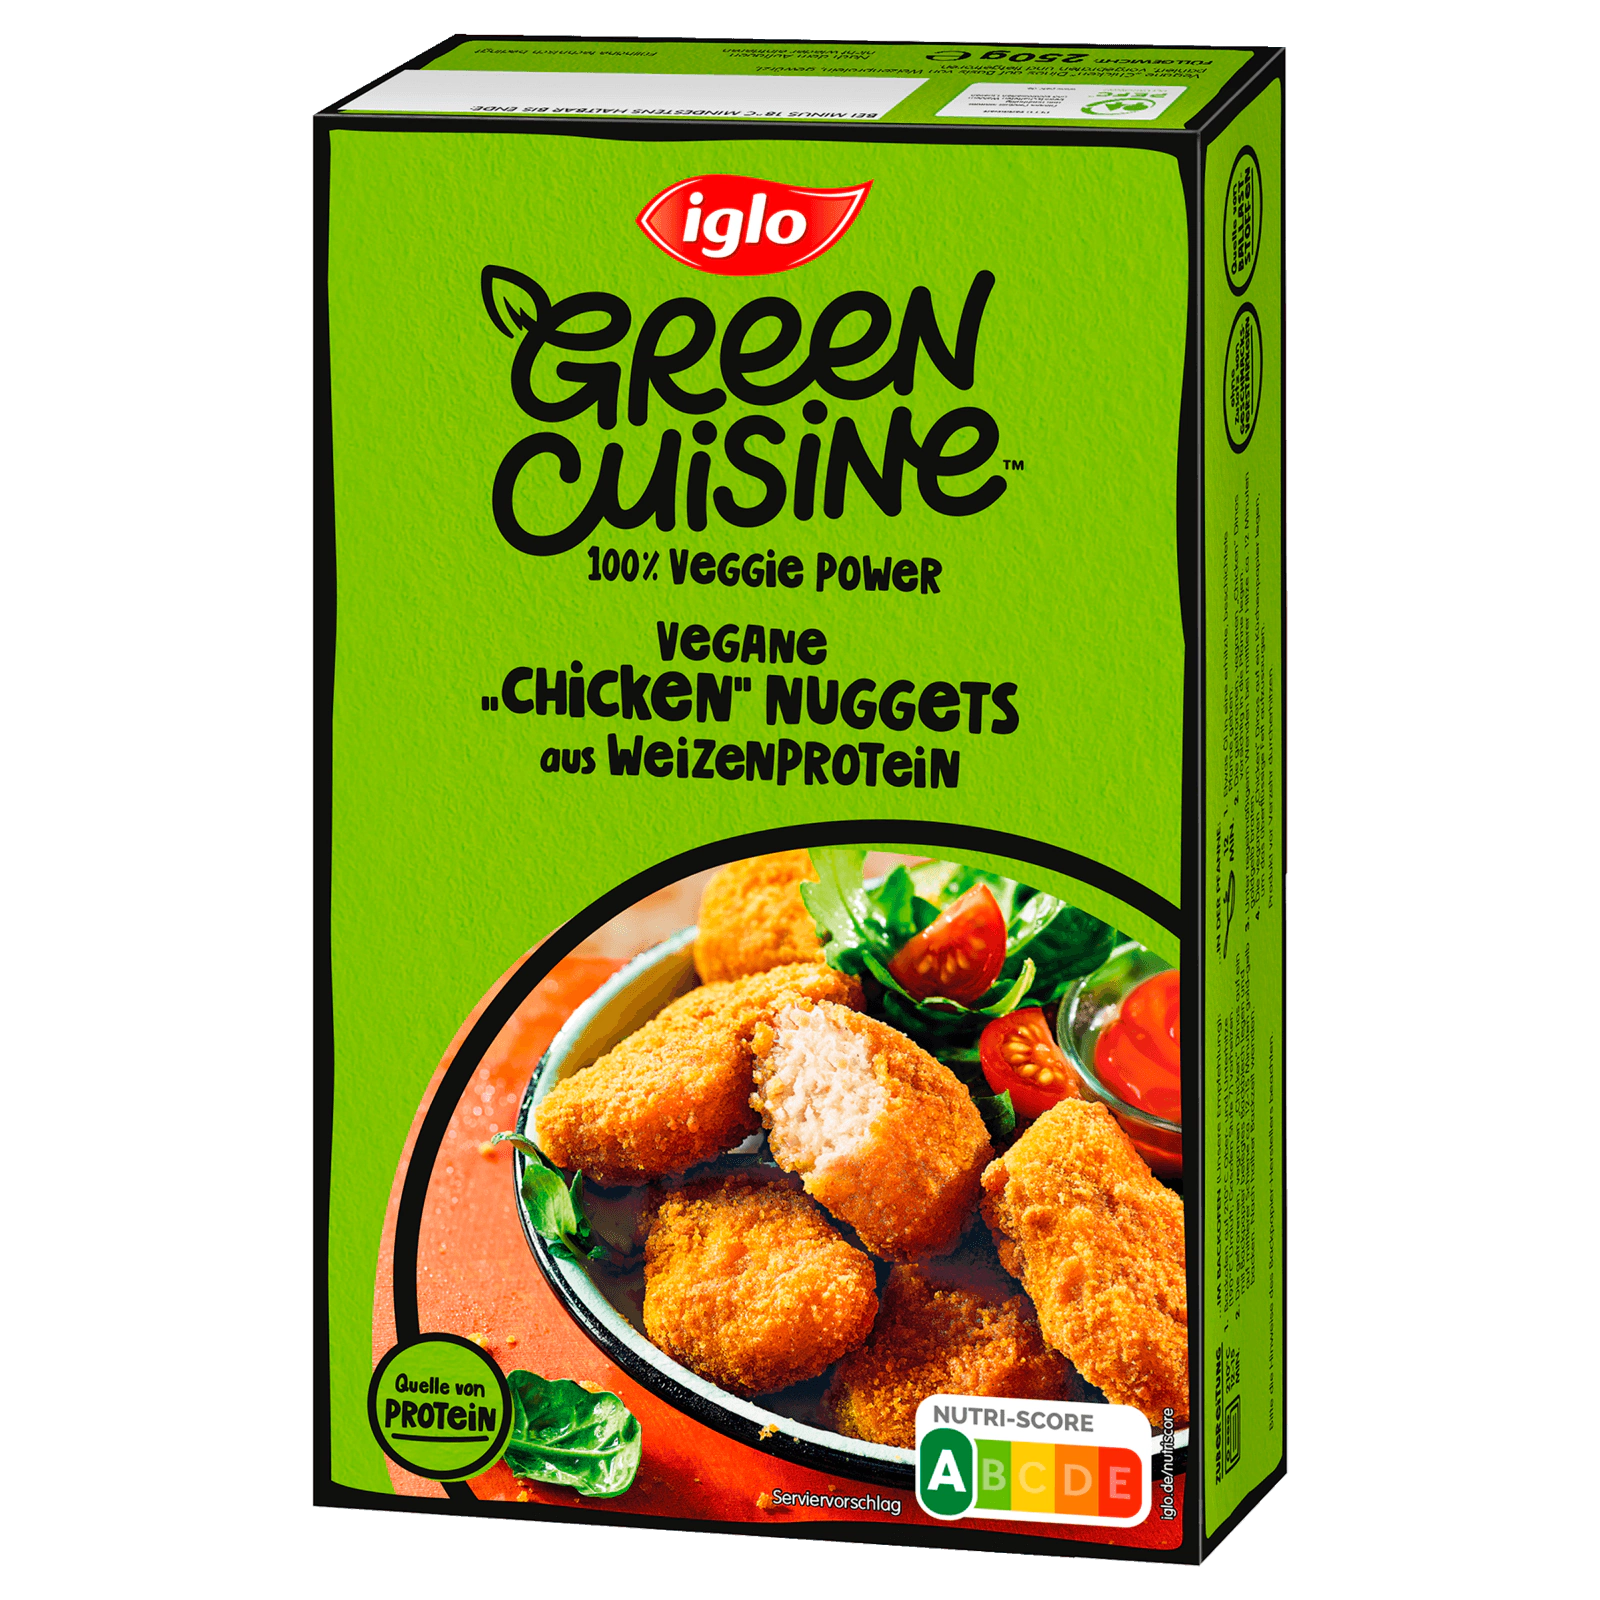 Iglo Green Cuisine "Chicken" Nuggets vegan 250g